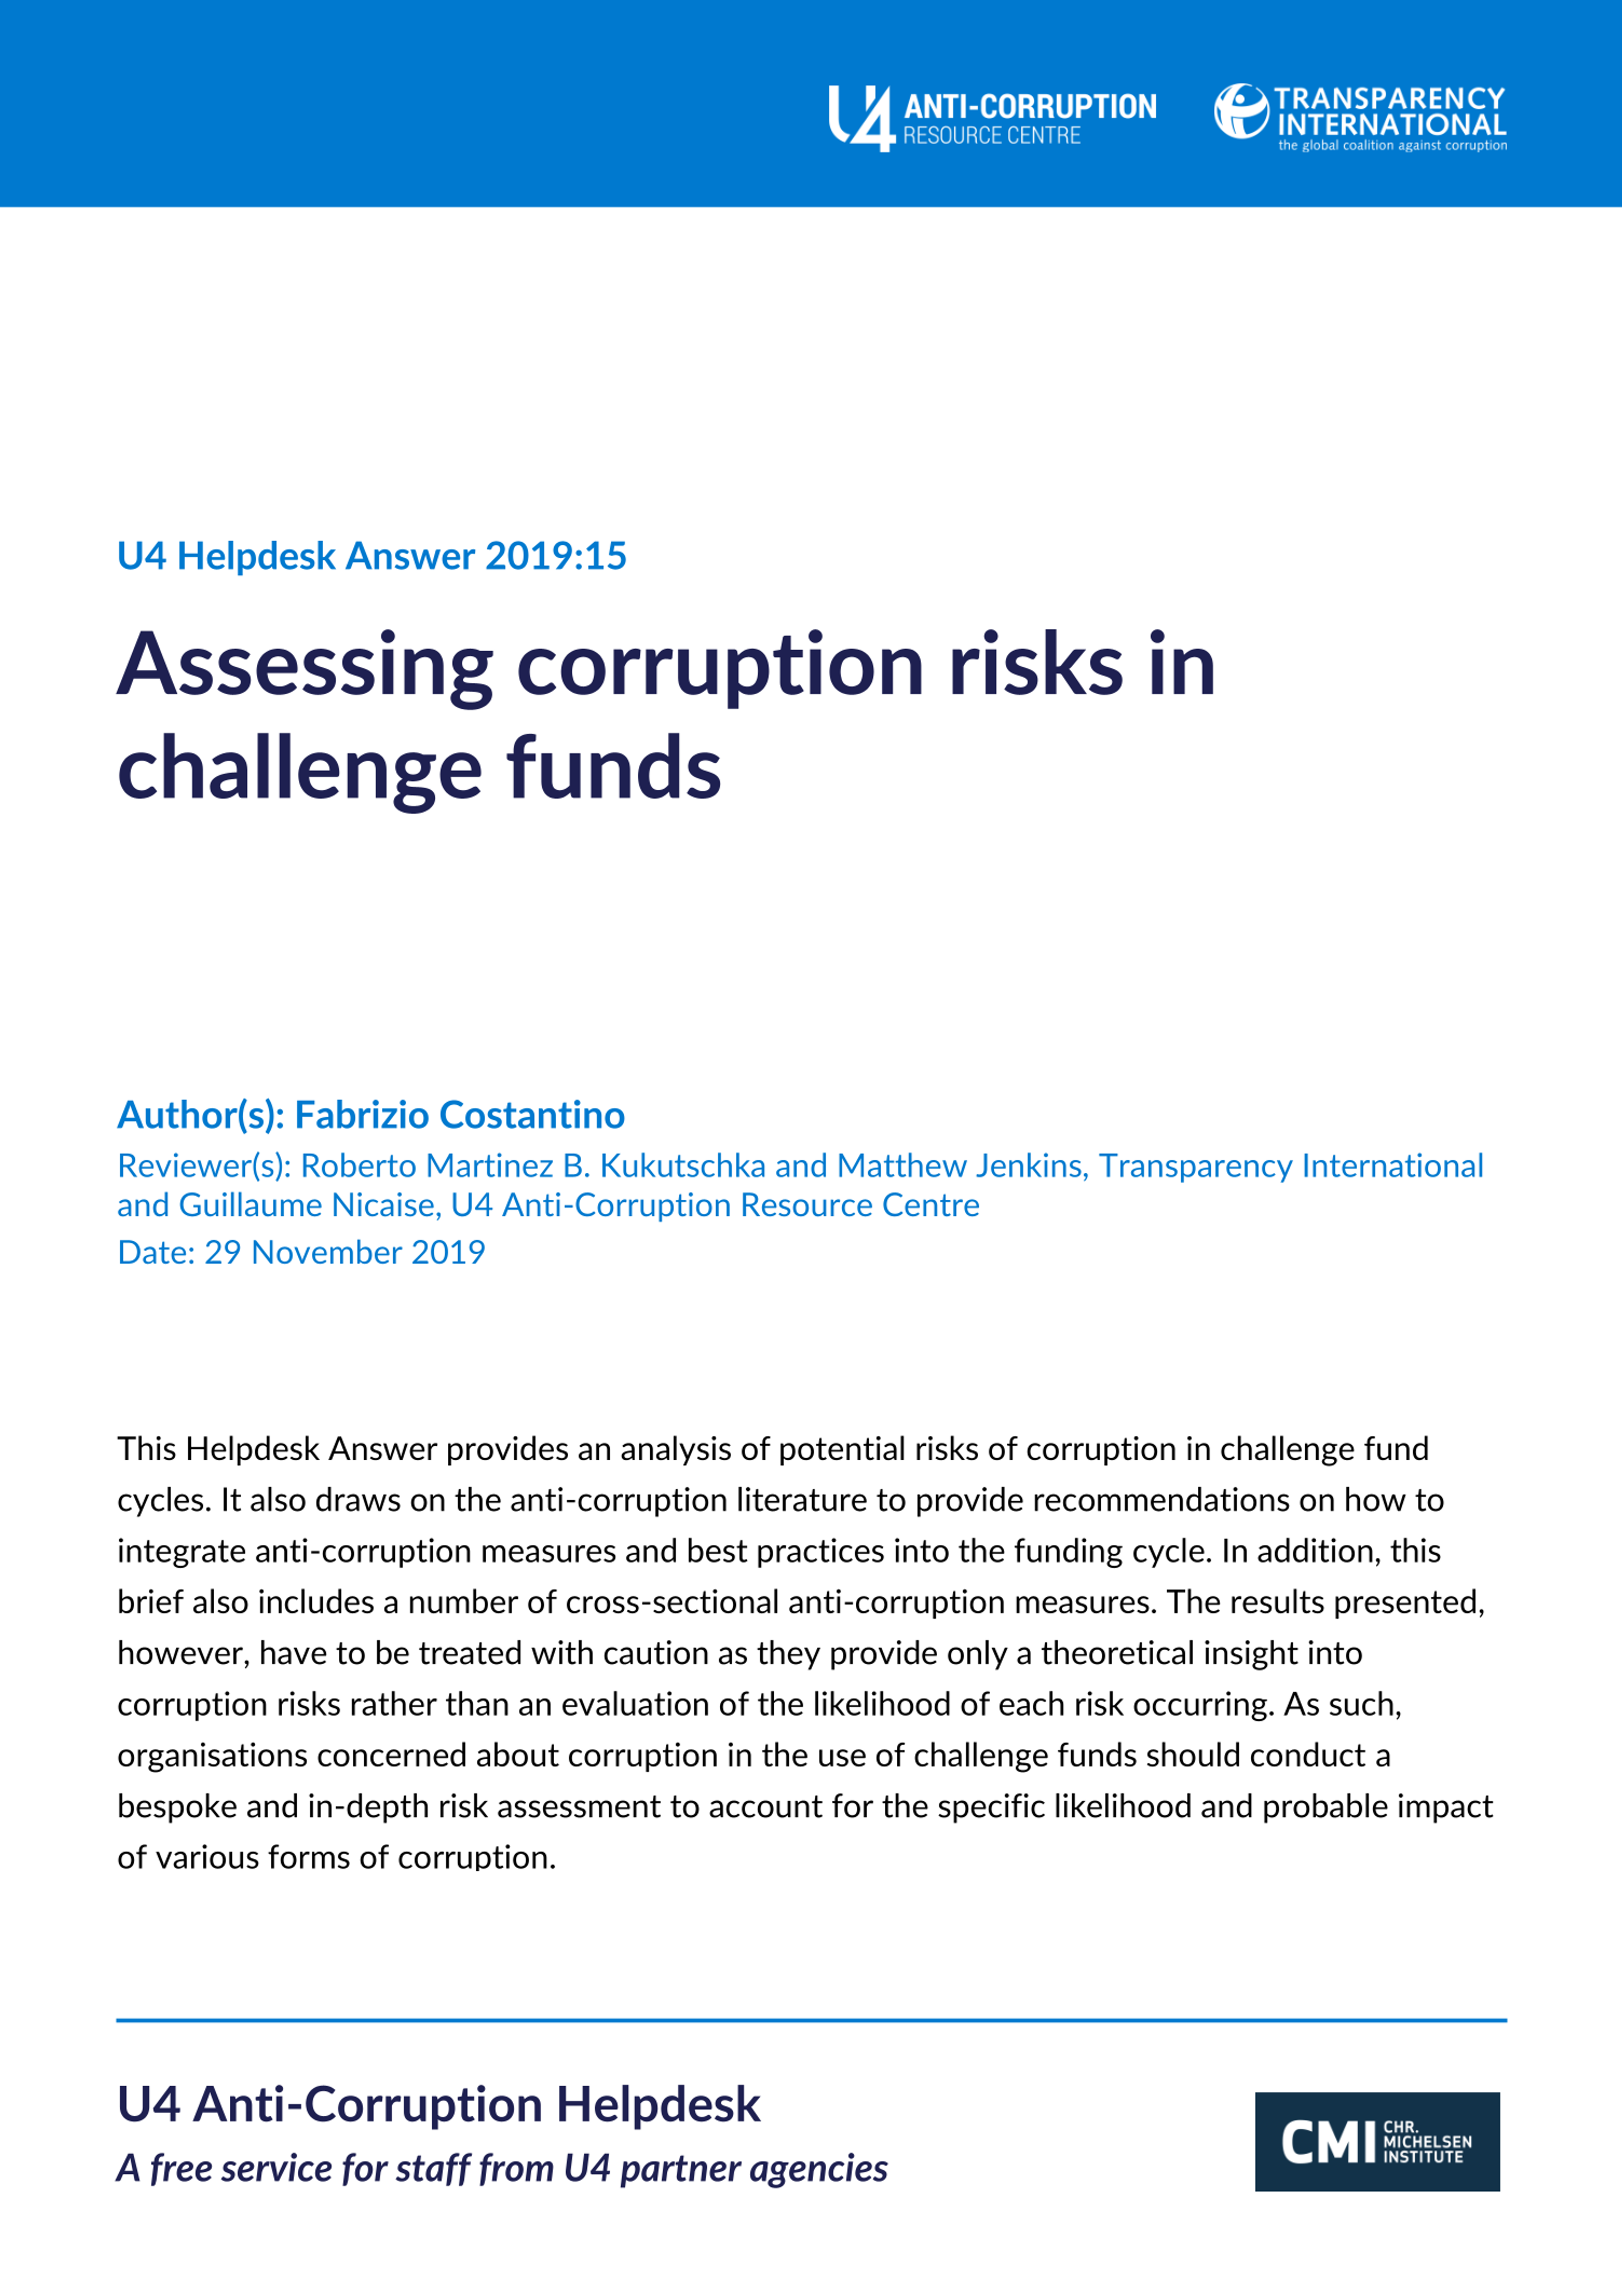 Assessing corruption risks in challenge funds